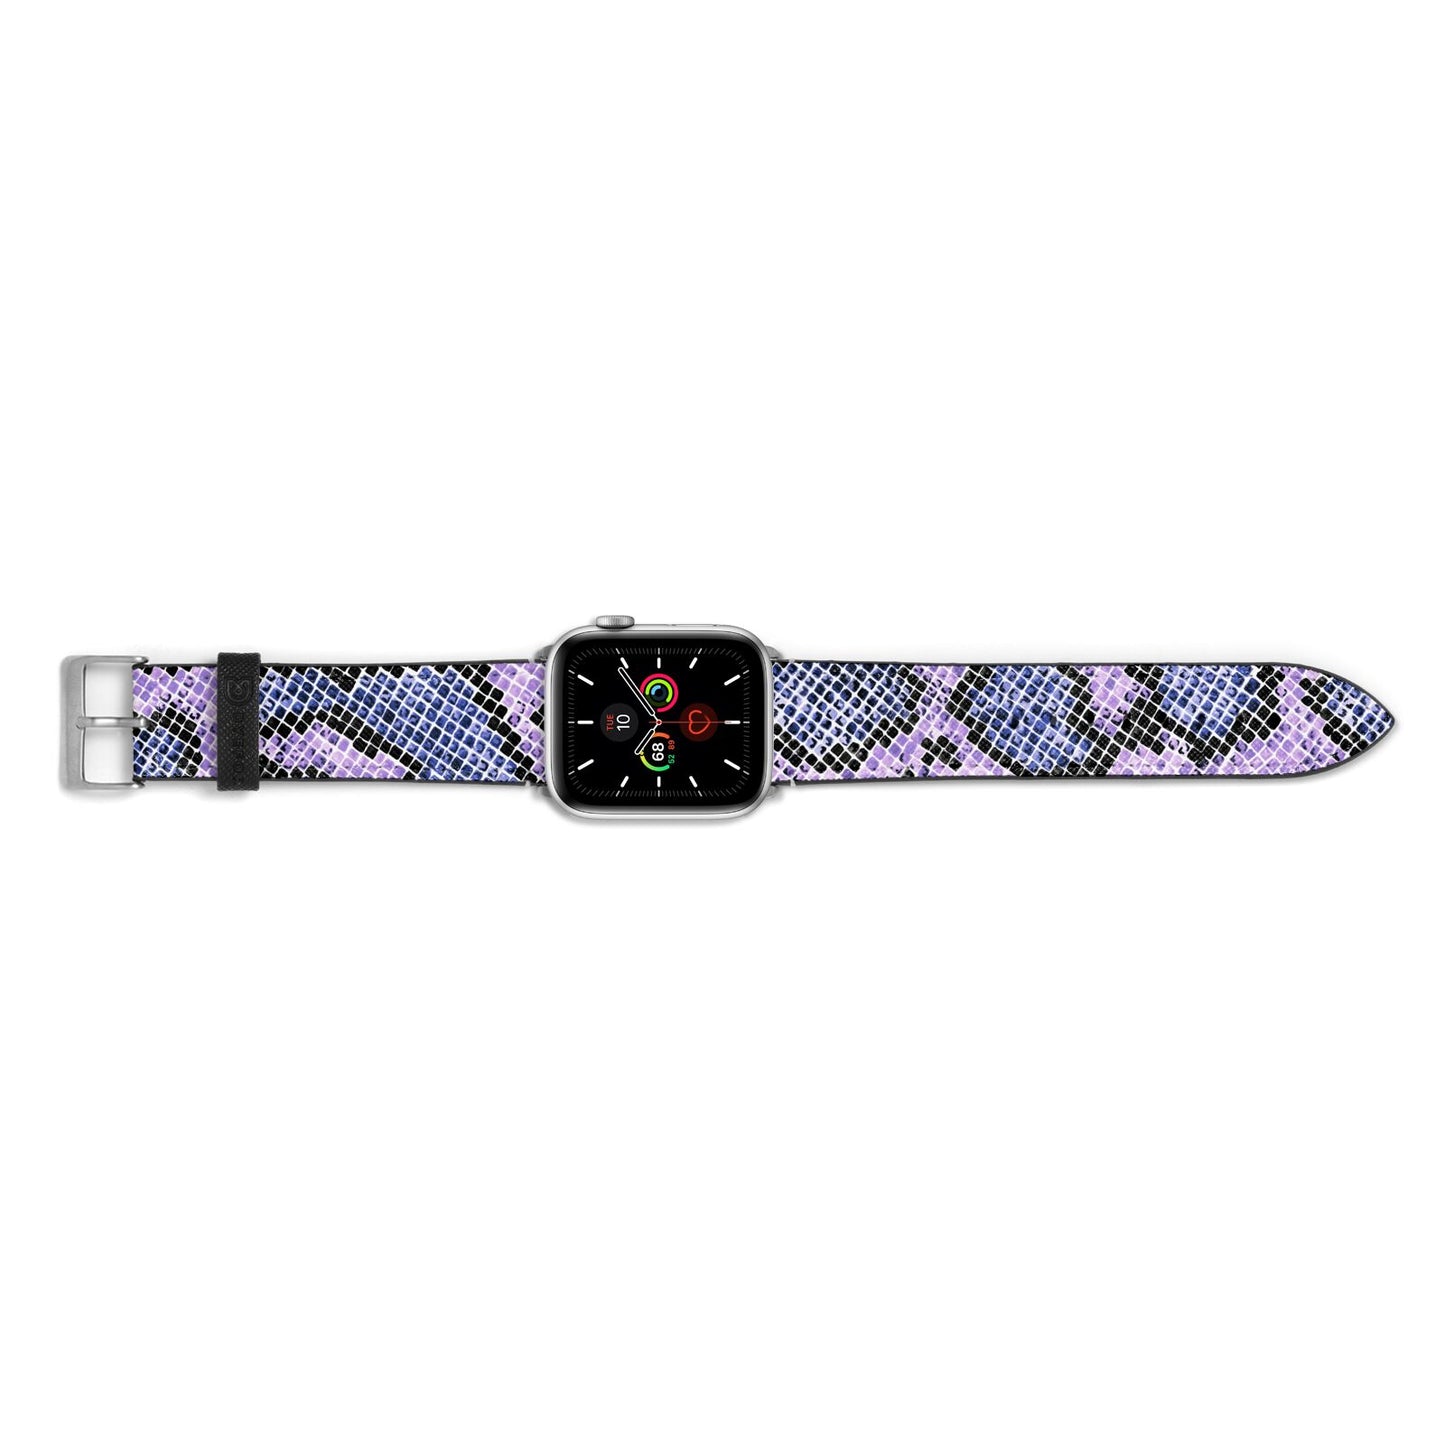 Purple And Blue Snakeskin Apple Watch Strap Landscape Image Silver Hardware